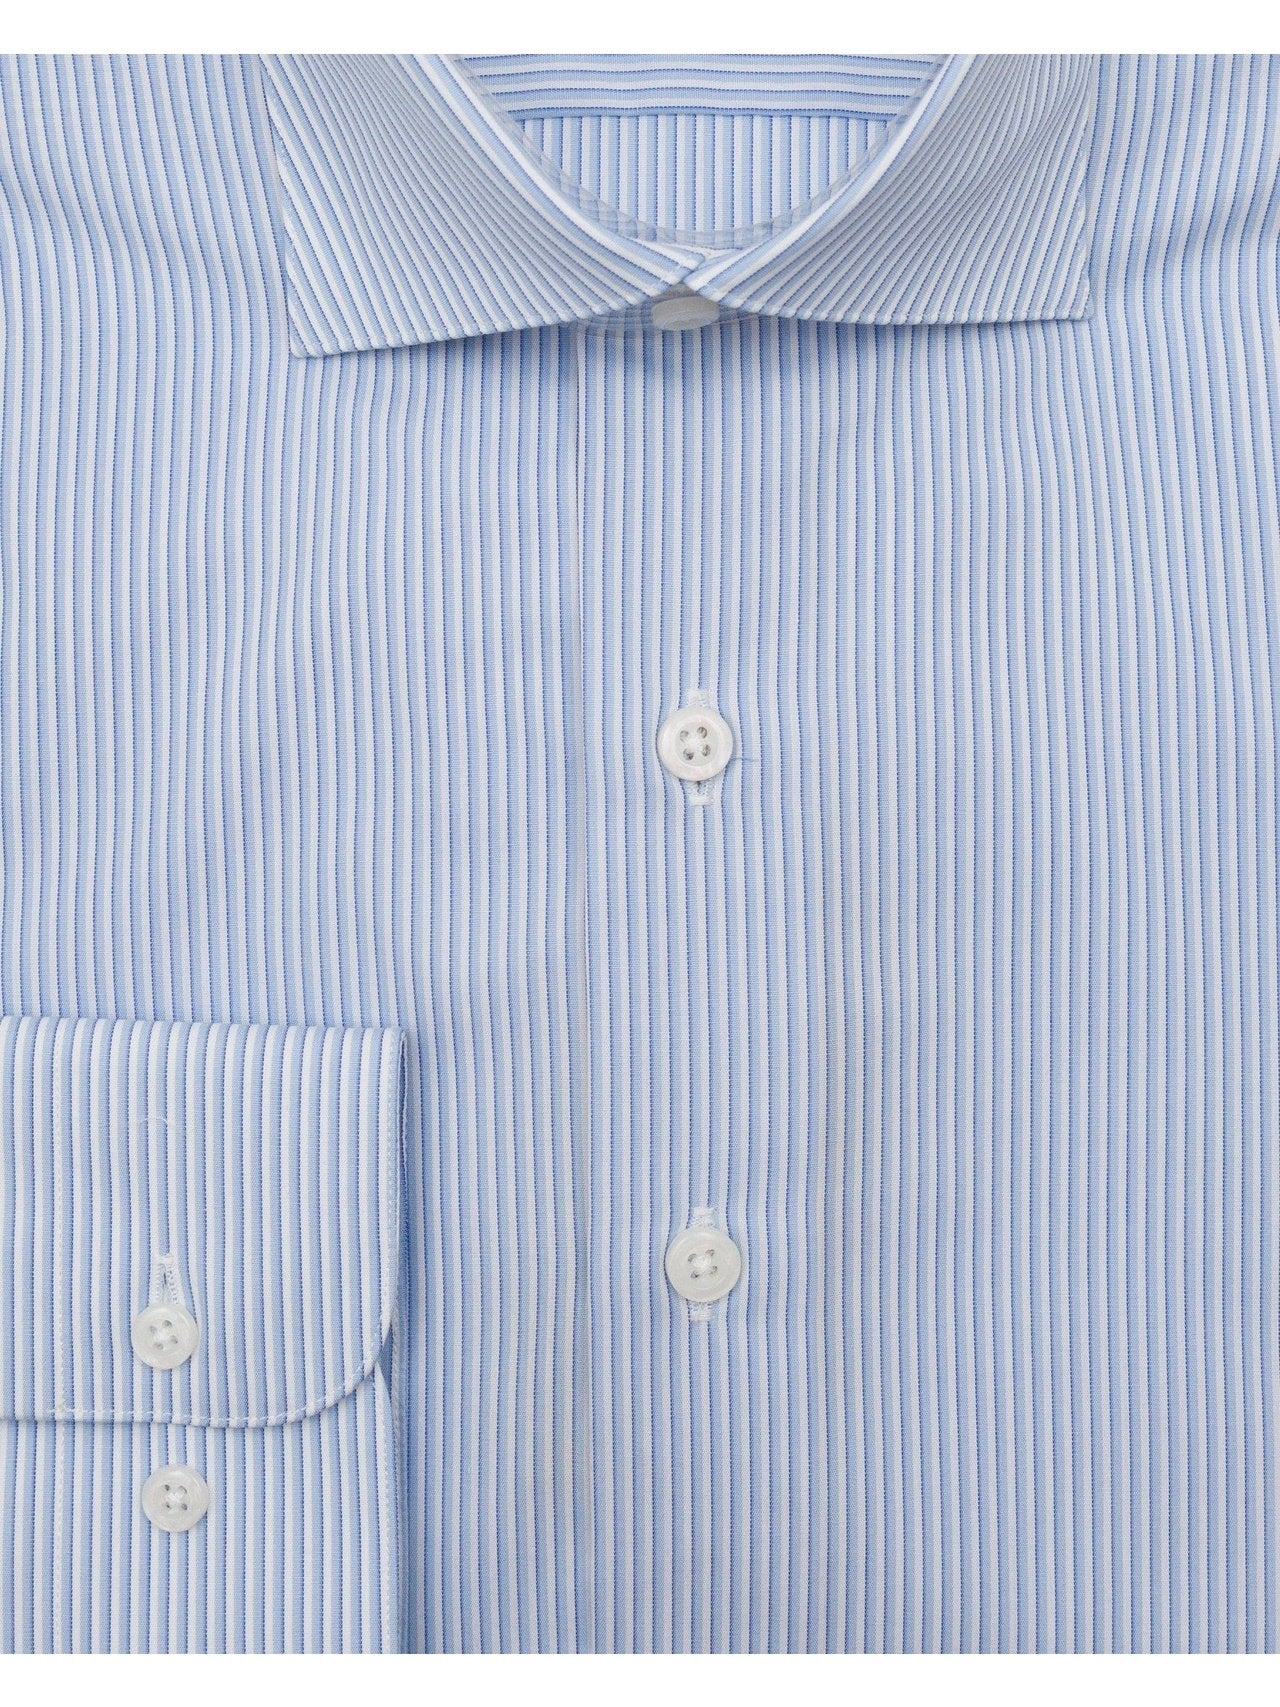 Brand P & S SHIRTS Mens Cotton Blue Striped Slim Fit Spread Collar Wrinkle Free Dress Shirt